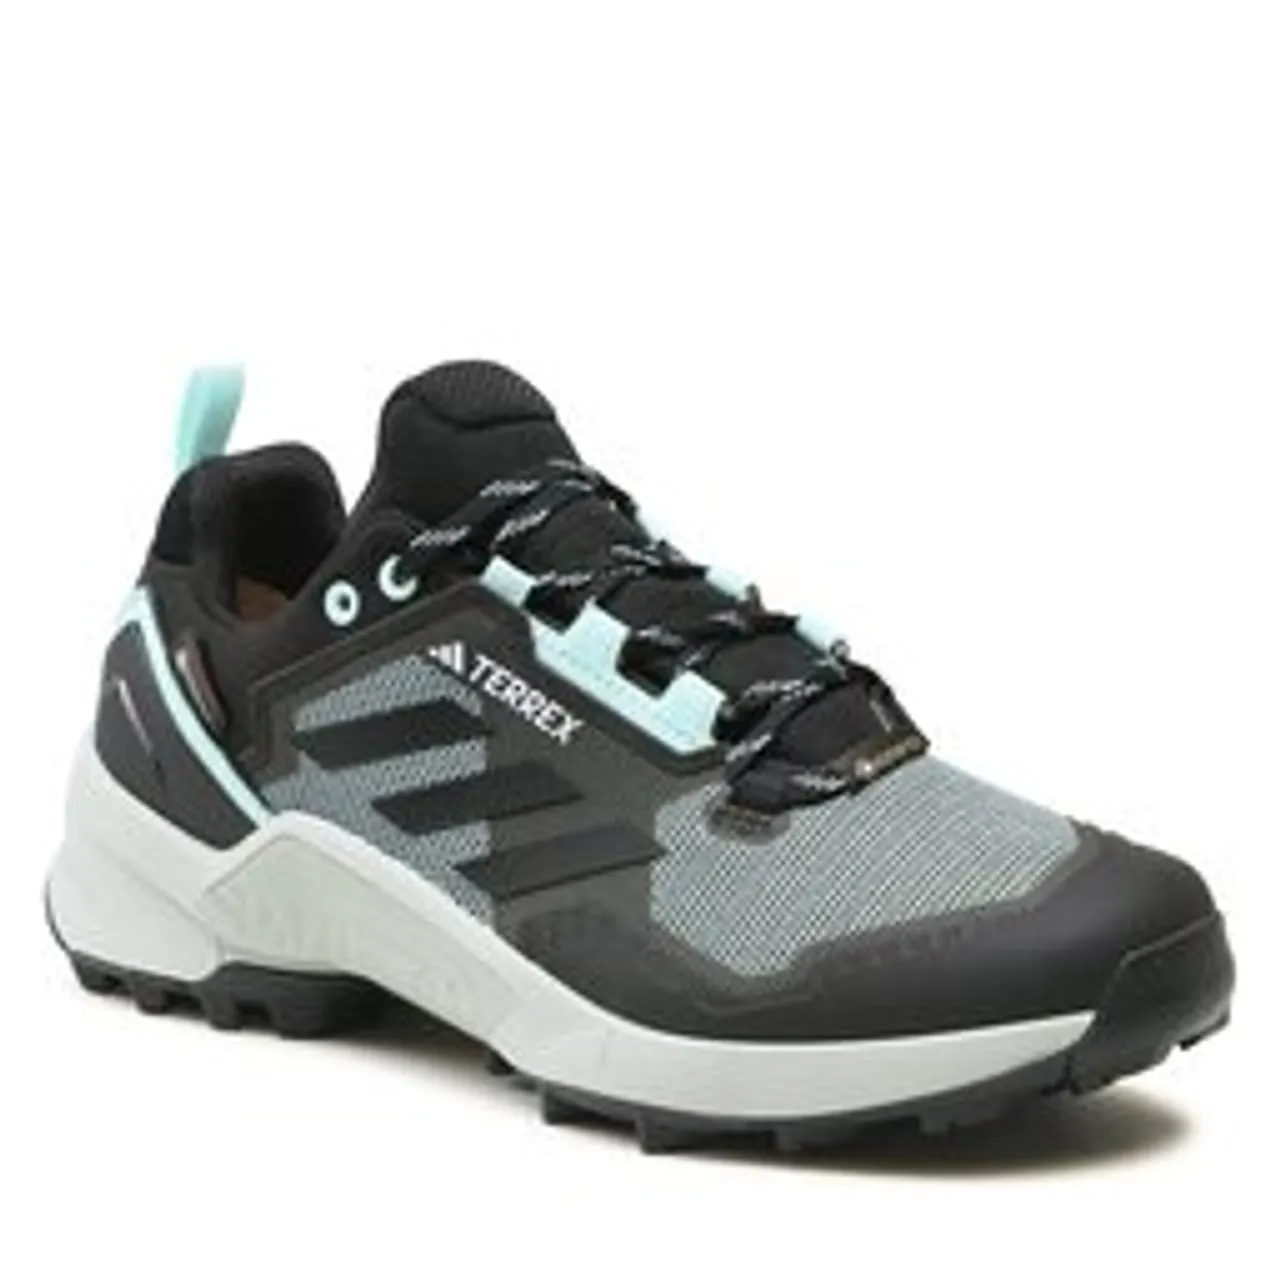 Trekkingschuhe adidas Terrex Swift R3 GORE-TEX Hiking Shoes IF2407 Türkisfarben